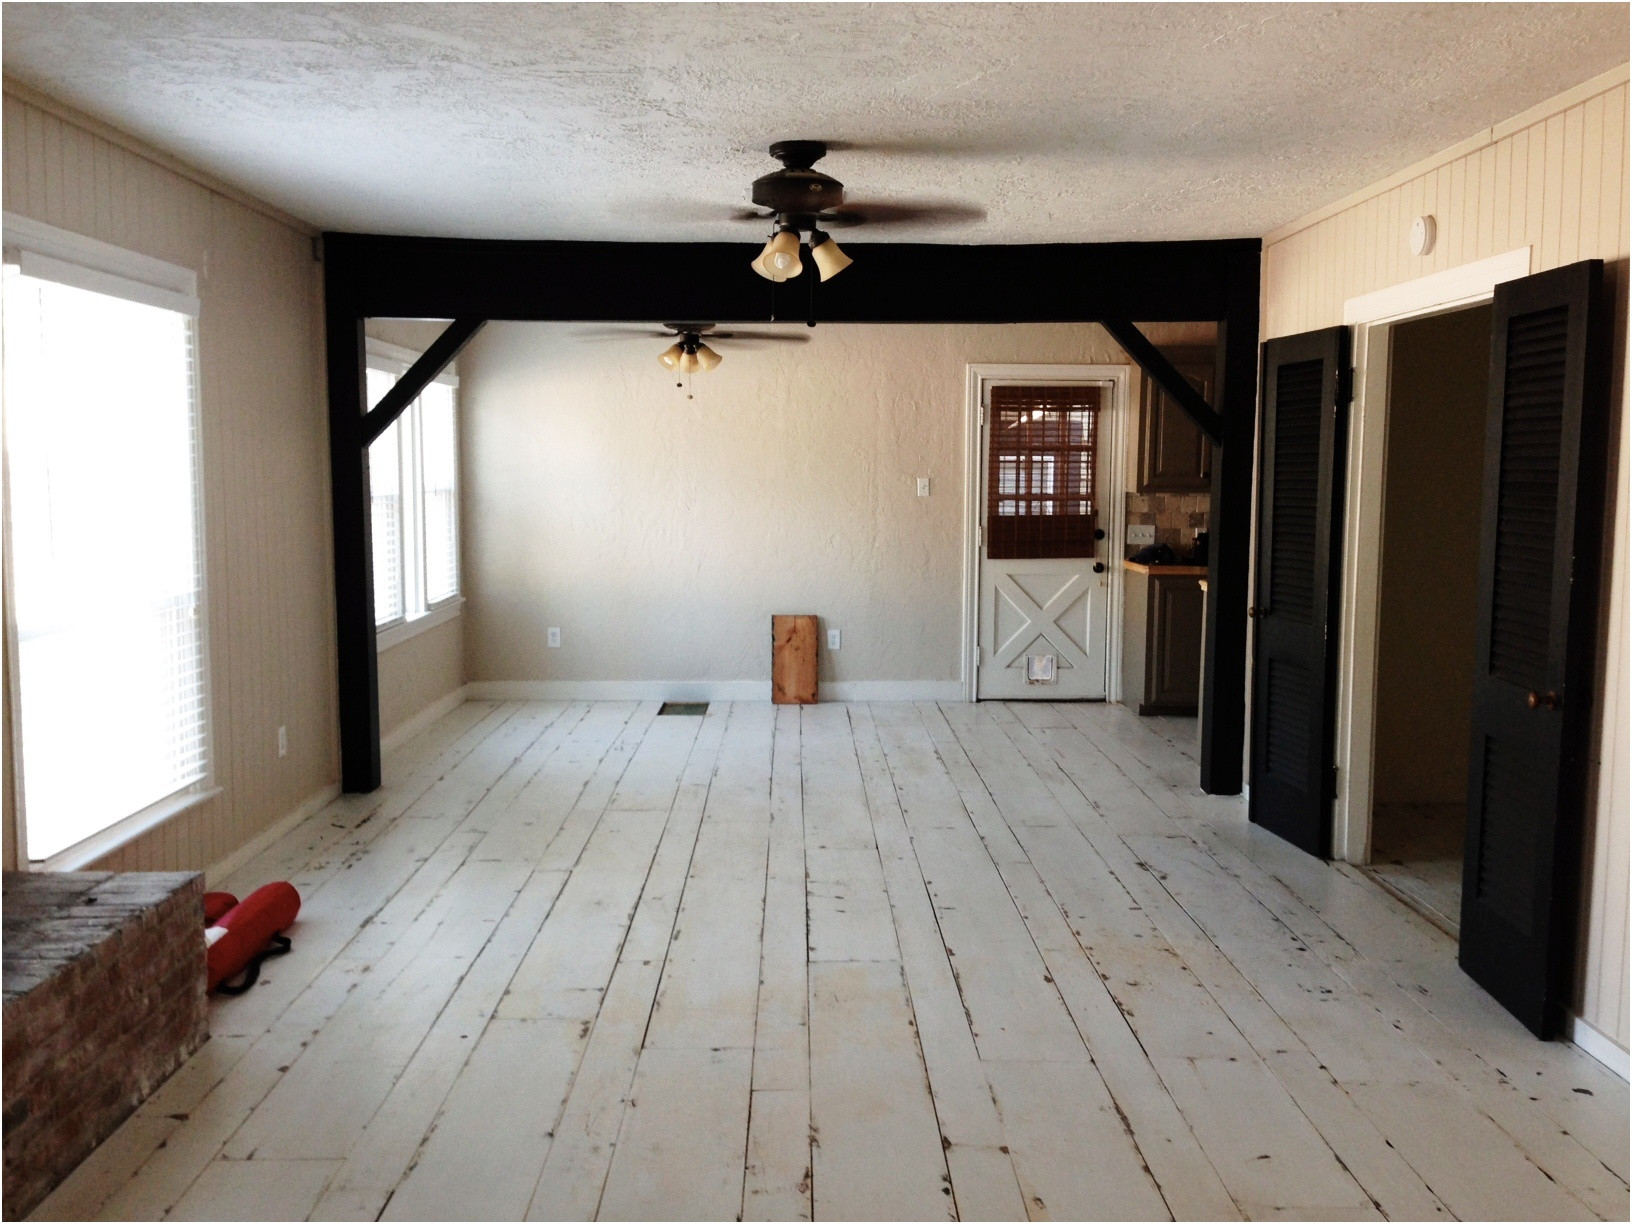 Hardwood Floor Colors Home Depot Of Wood Flooring Ideas for Living Room Elegant Living Room Wall Colors Regarding Related Post